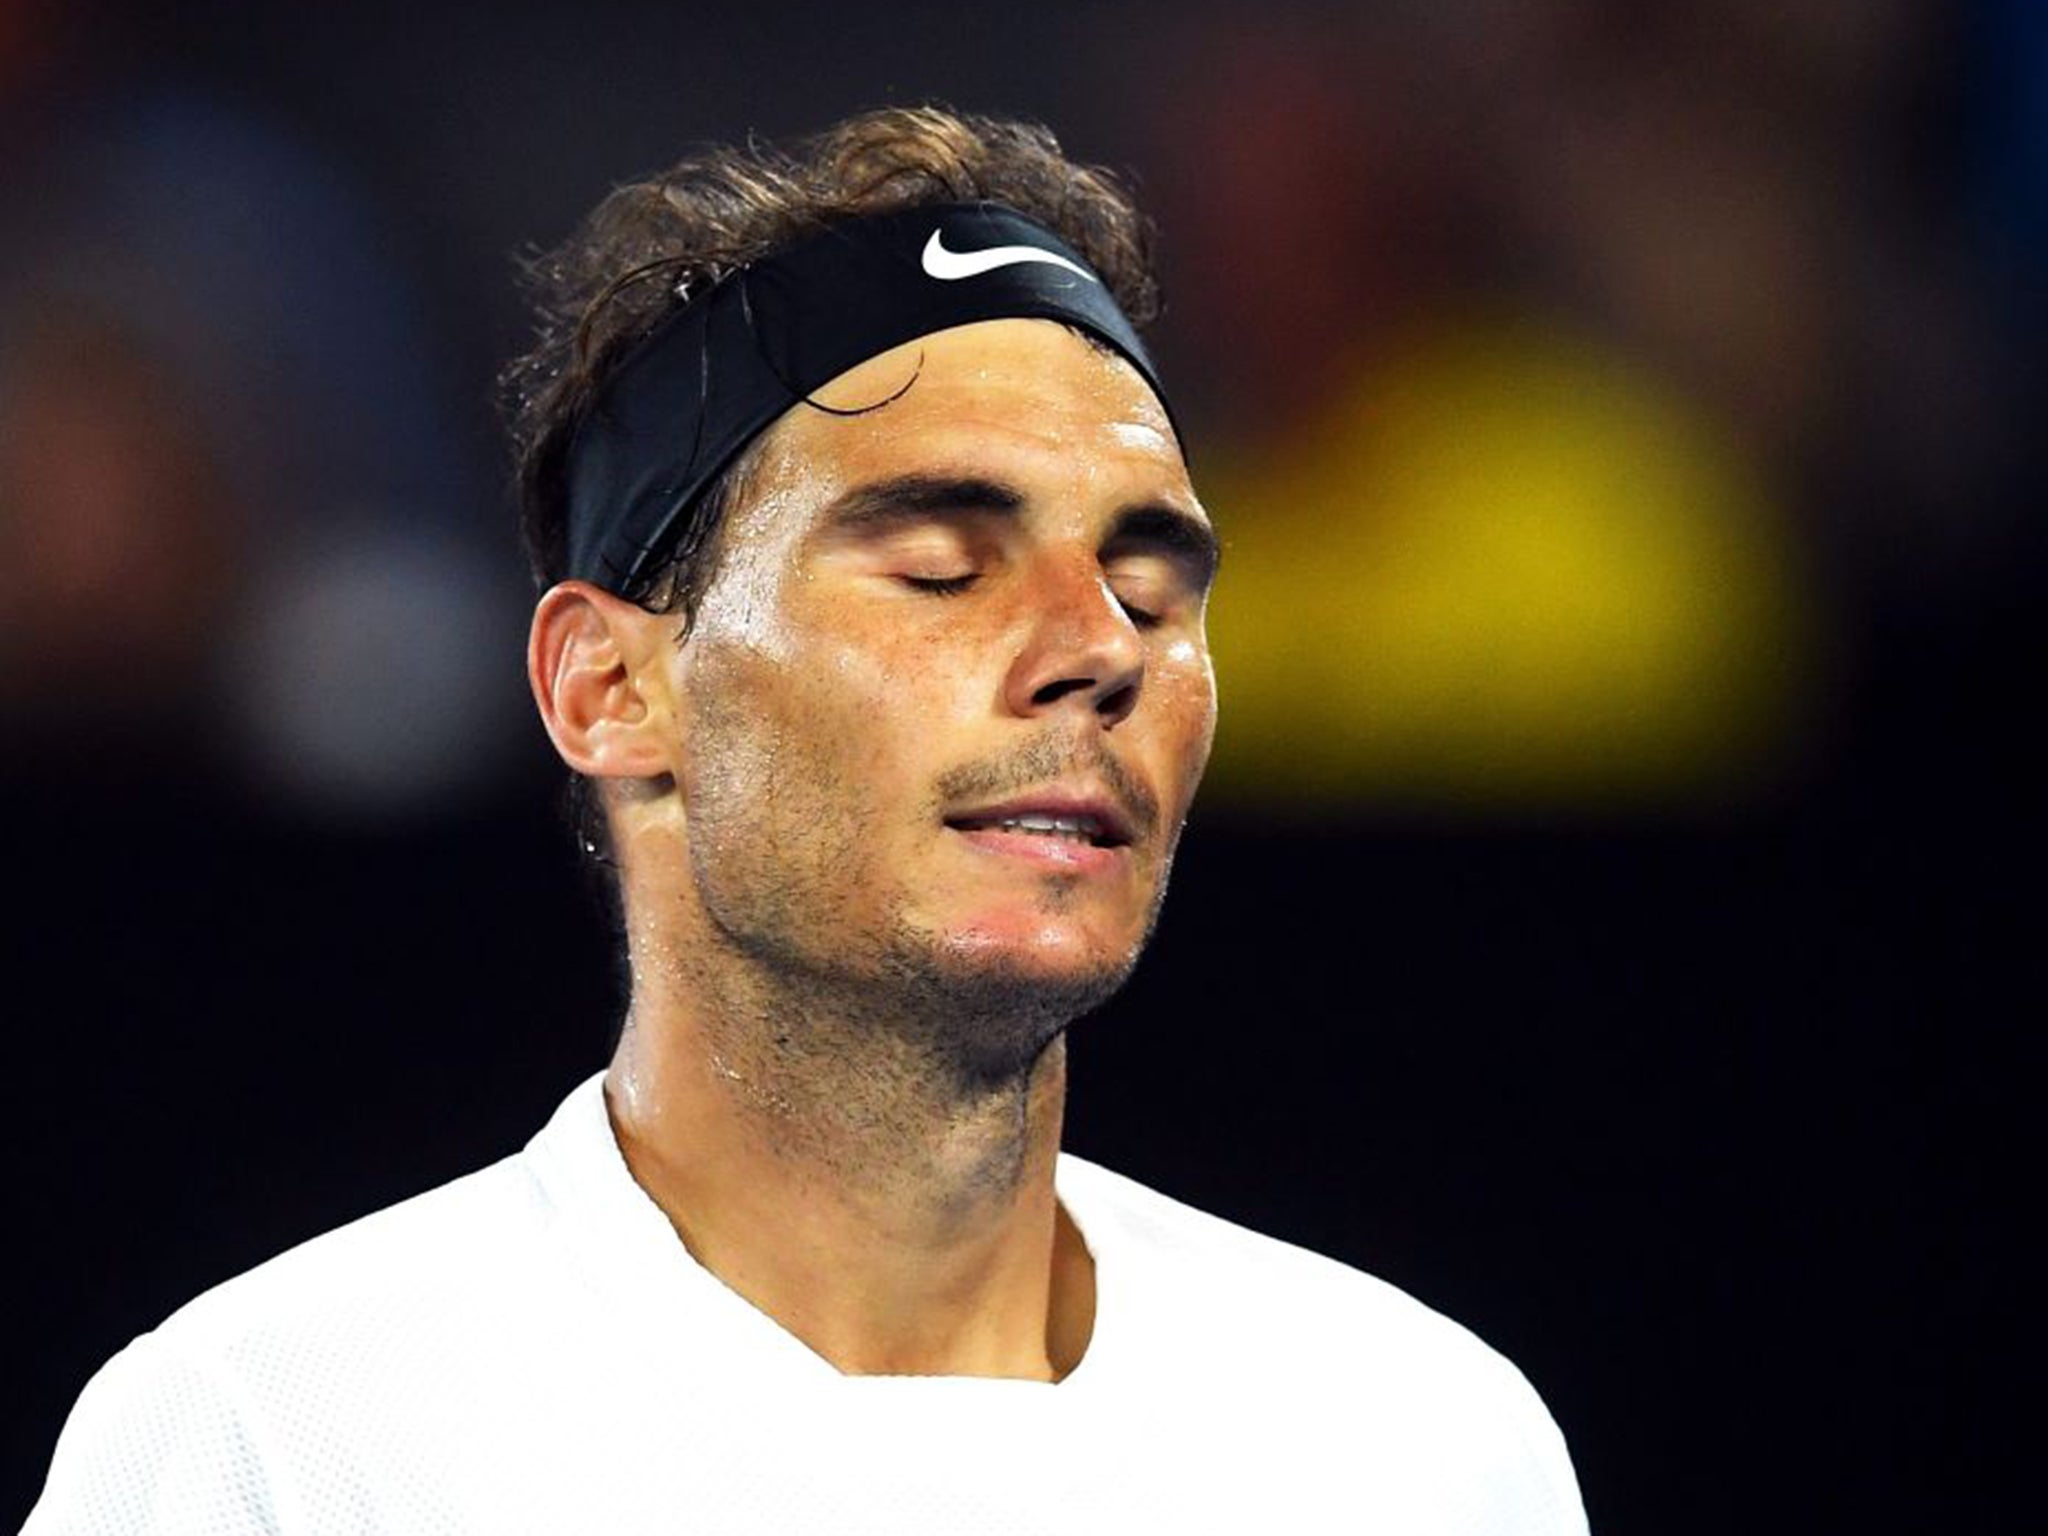 Rafael Nadal at the Australian Open Grand Slam tennis tournament in Melbourne, Victoria